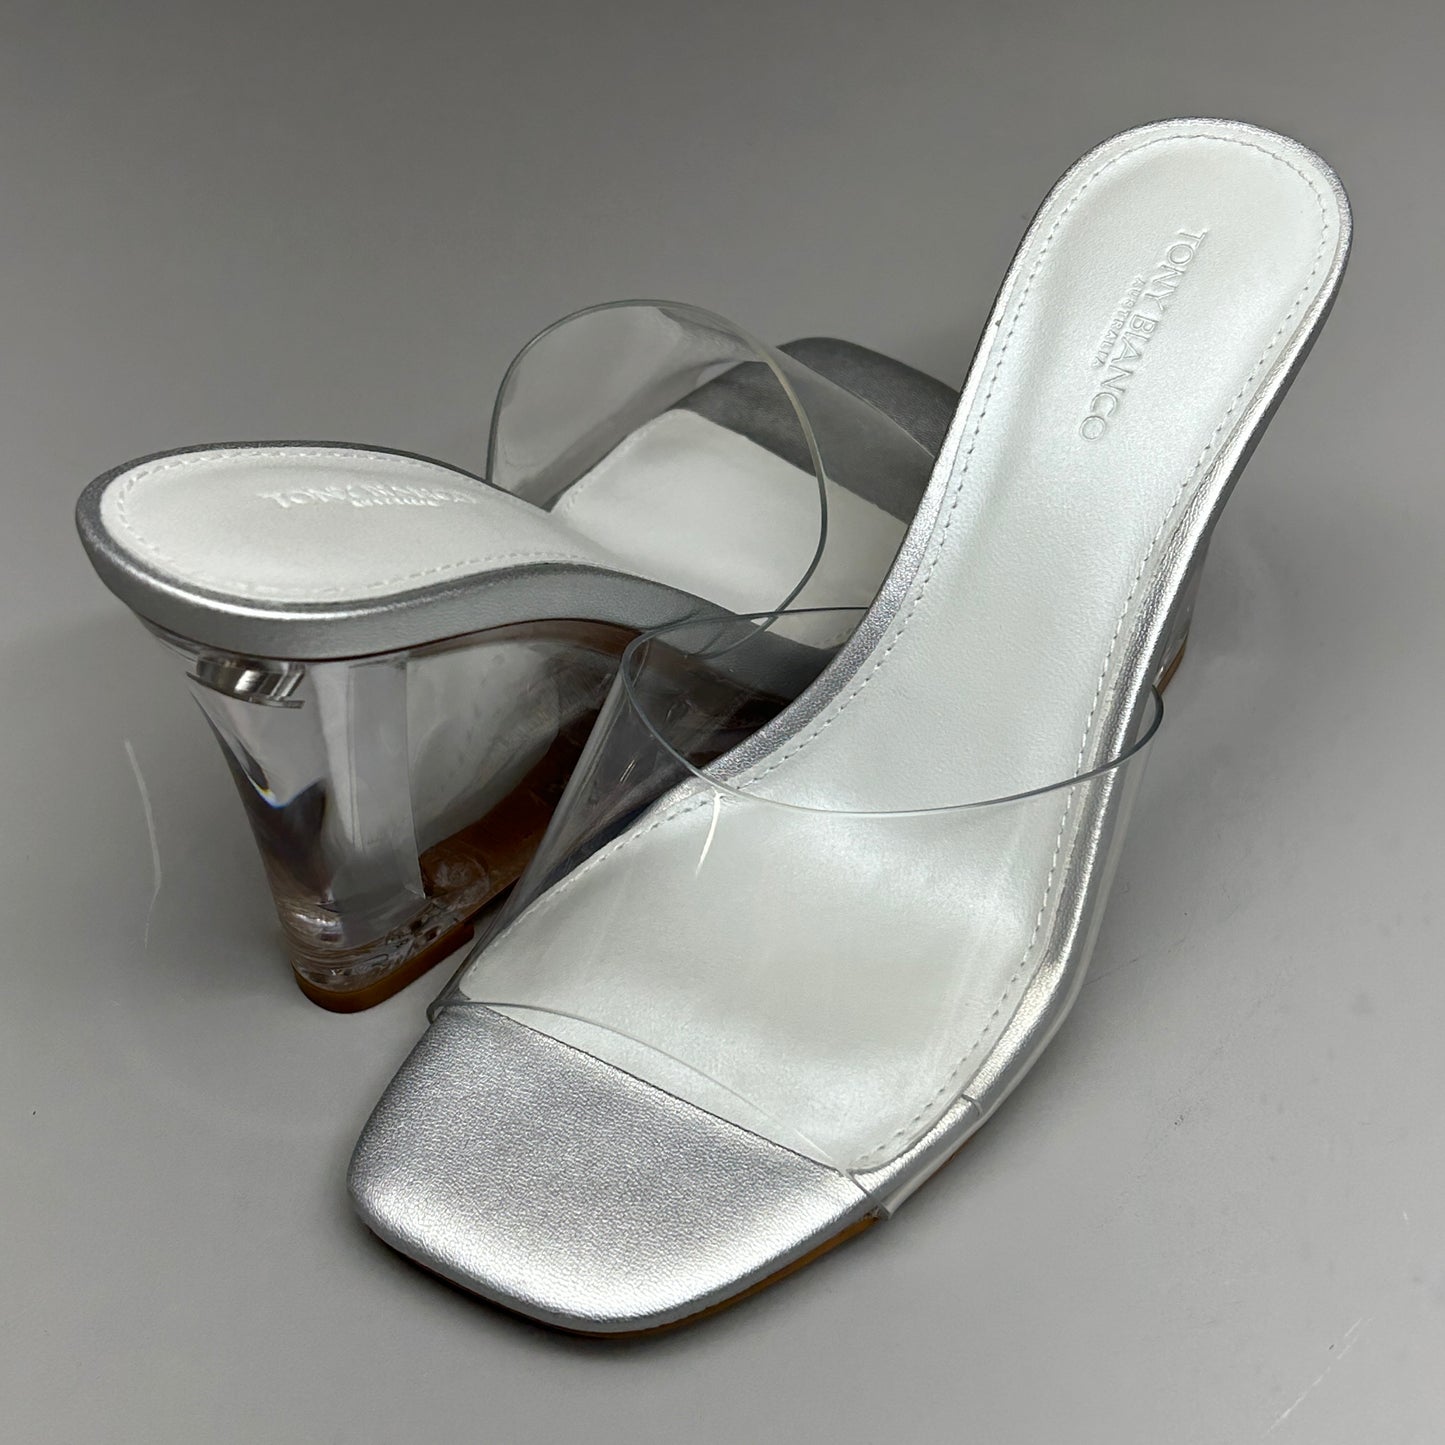 TONY BIANCO Alessi Clear Vinylite/Silver Wedges Women's Heels Sz 8 (New)